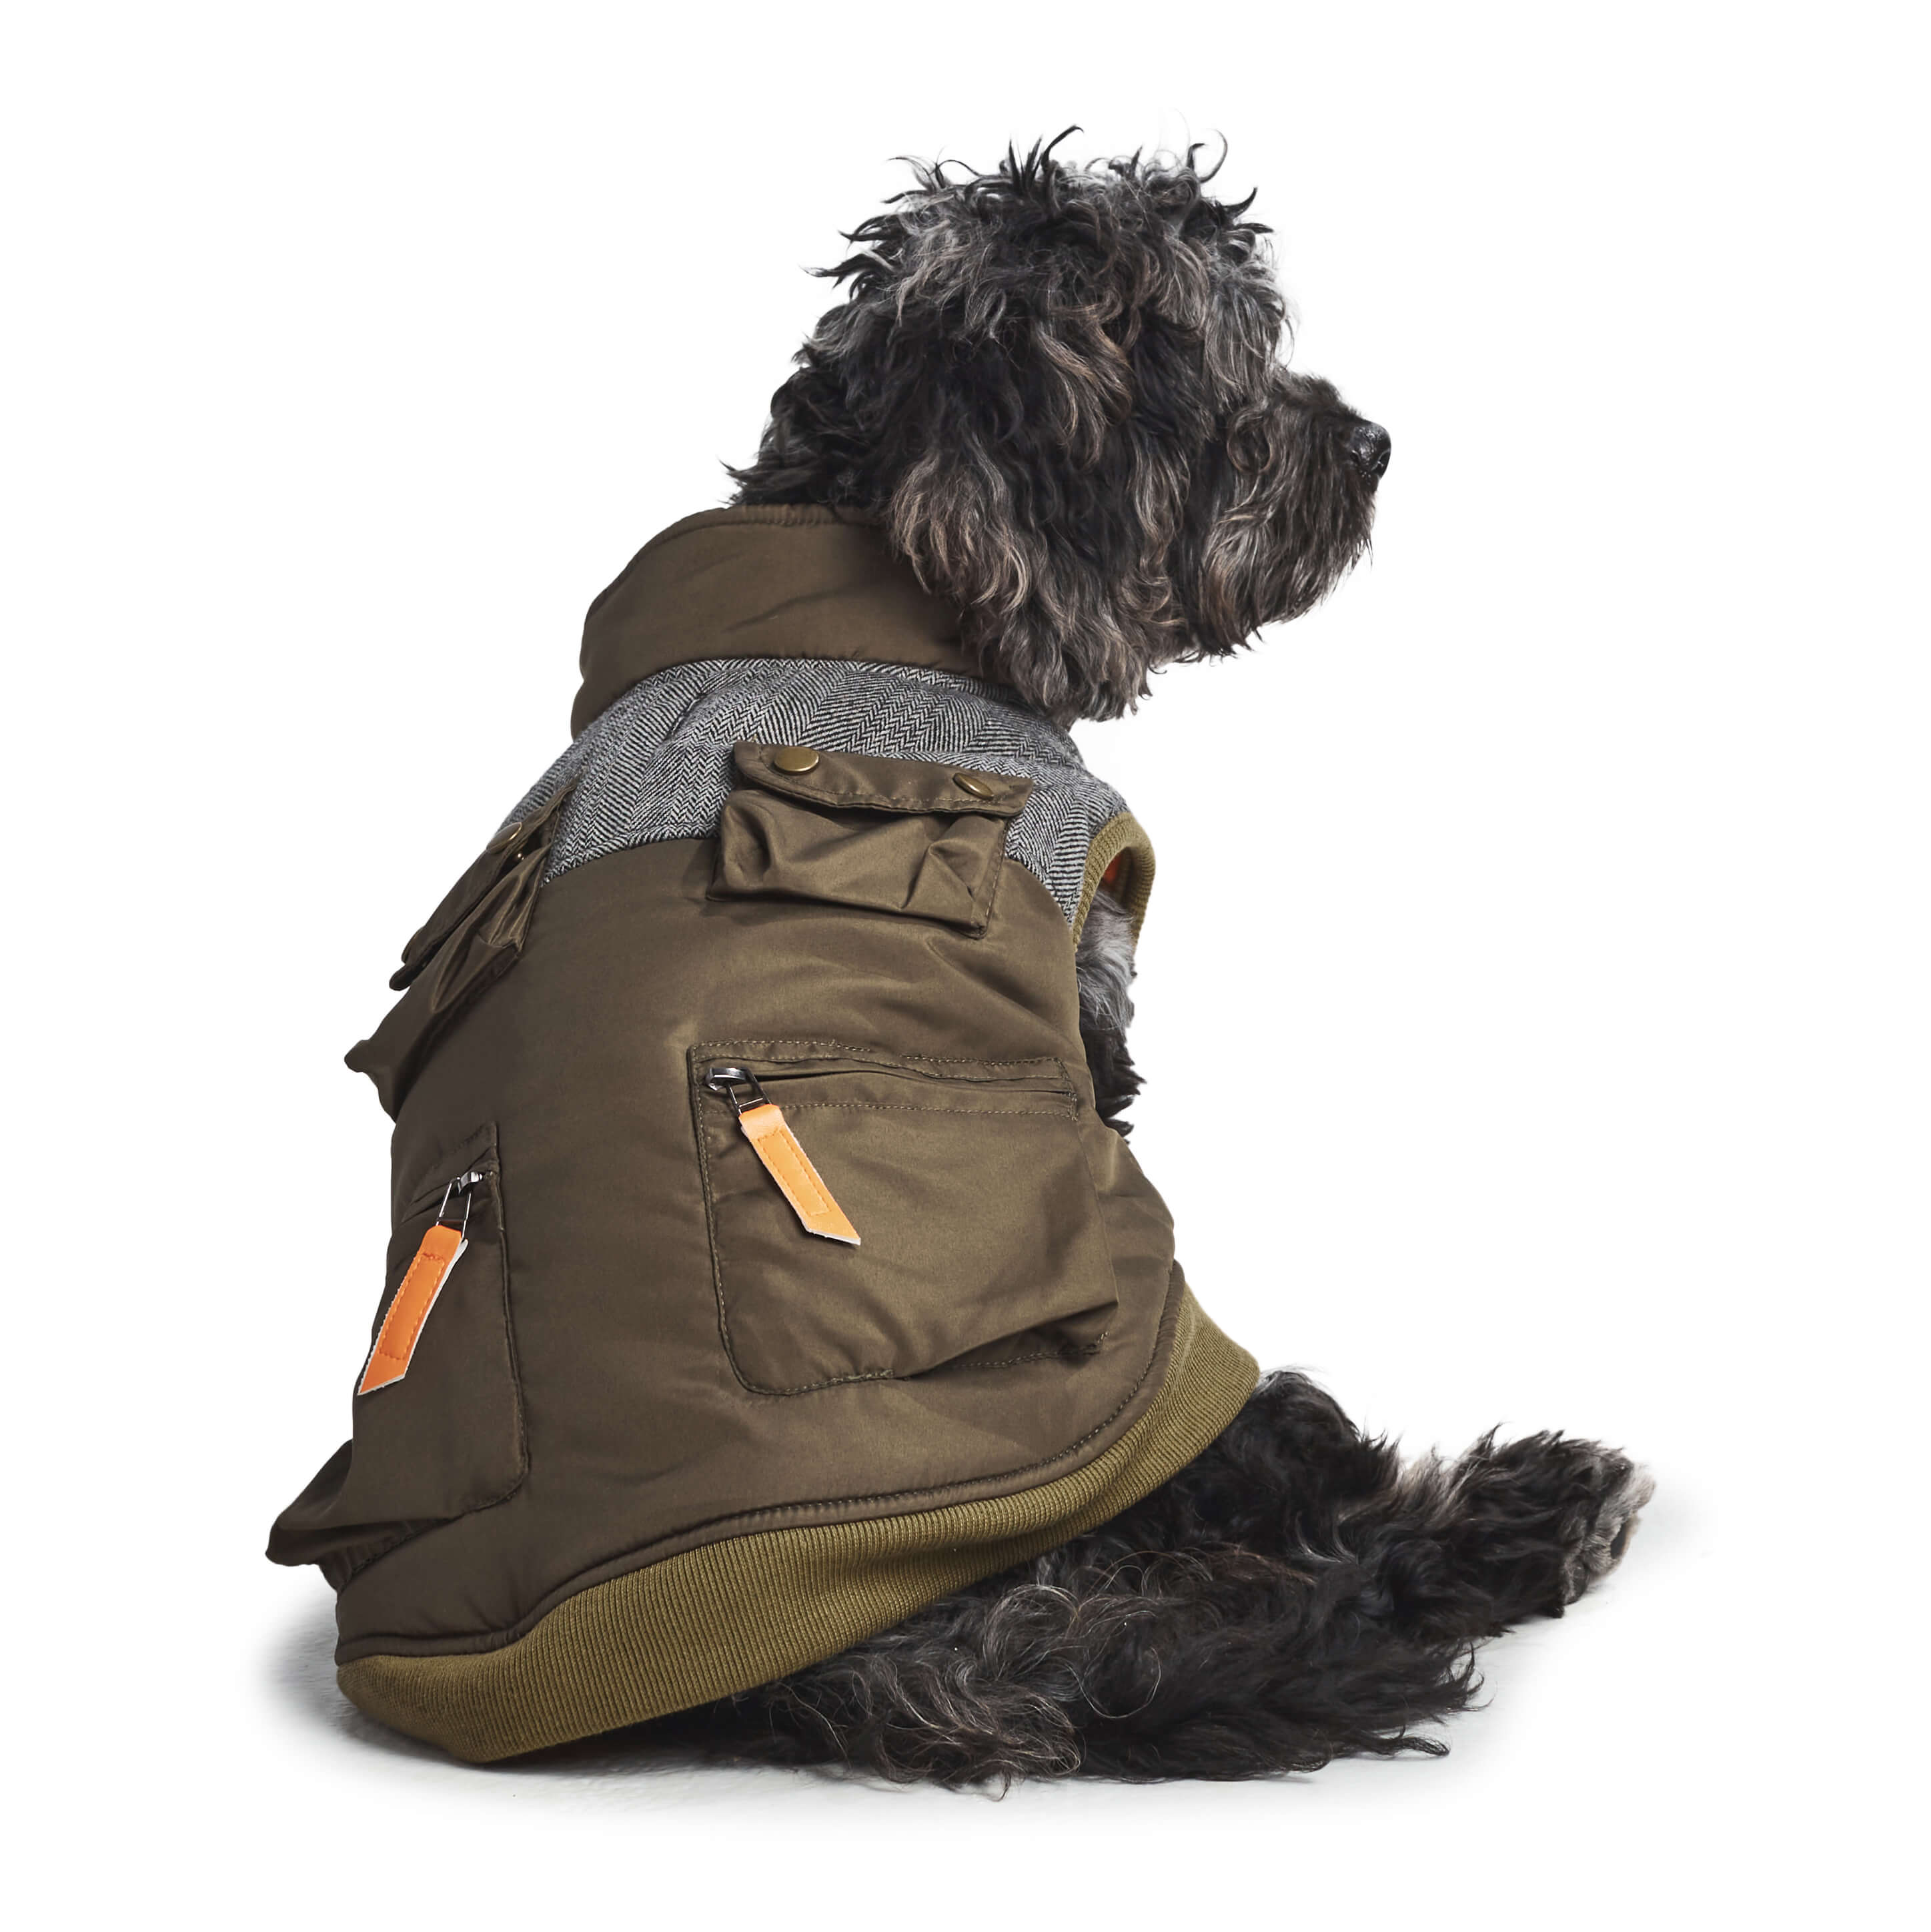 Dog wearing olive utility vest. back view